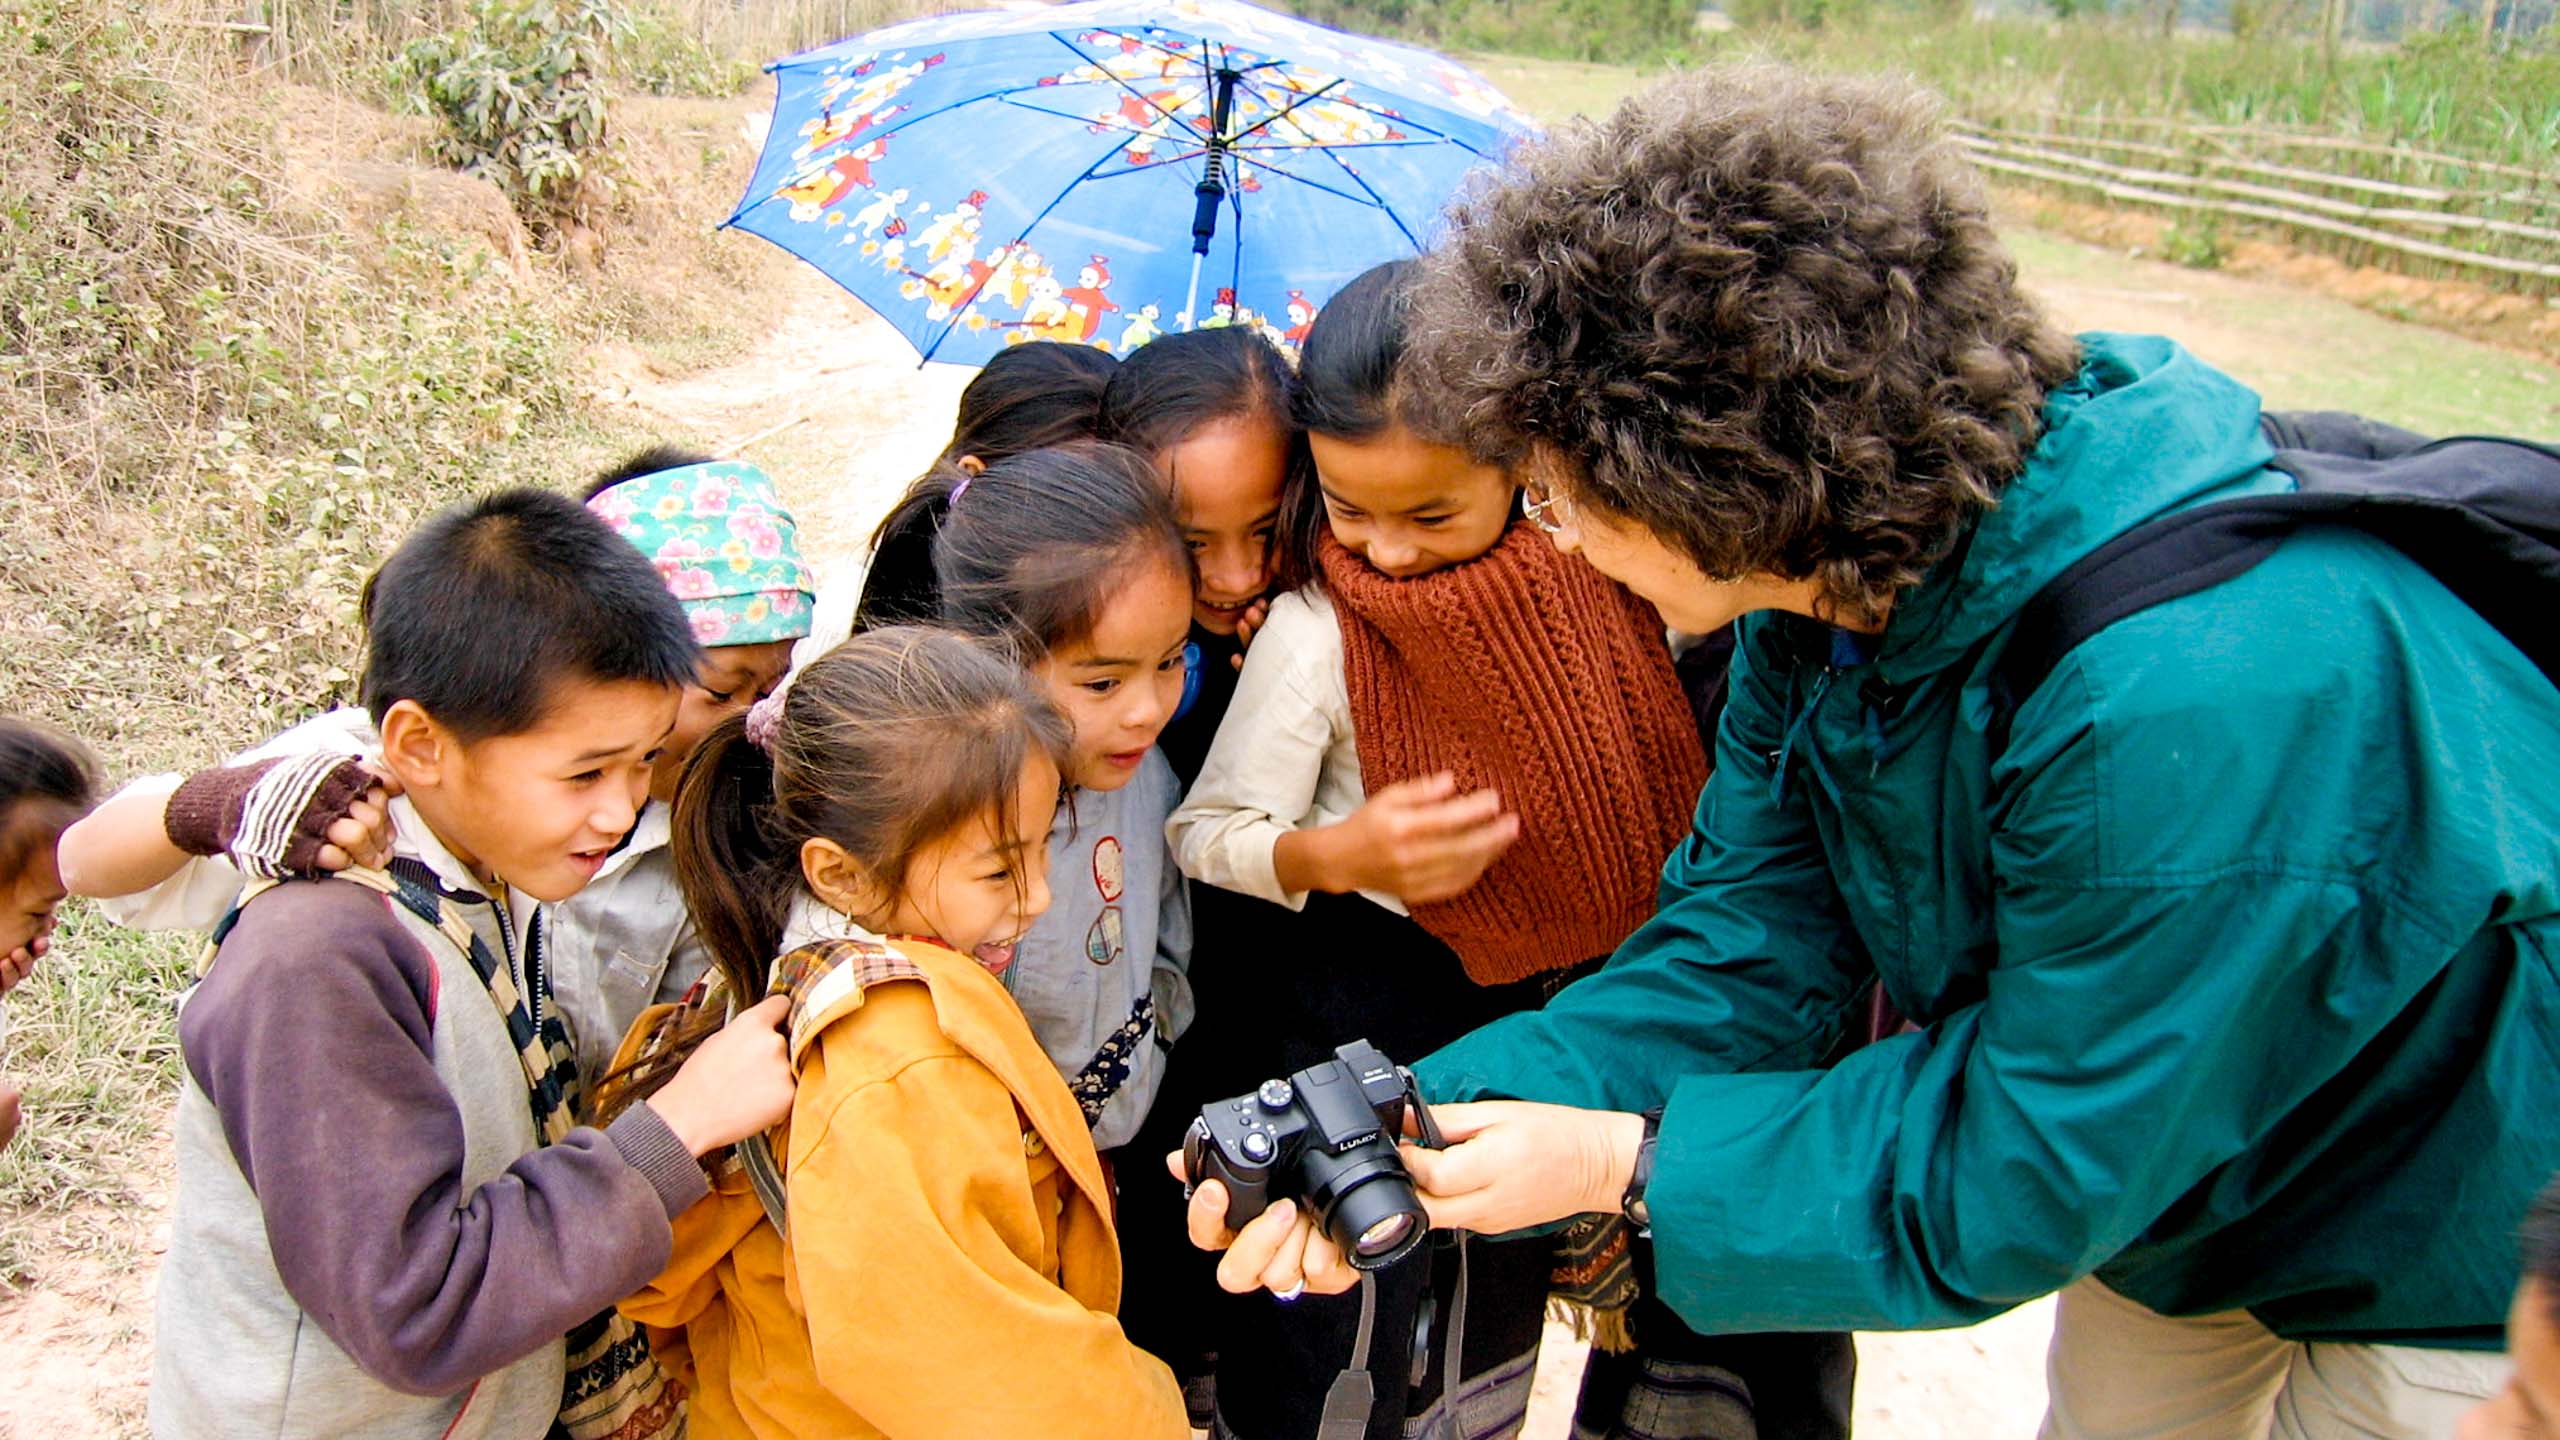 Group of Laos children look at traveler's camera